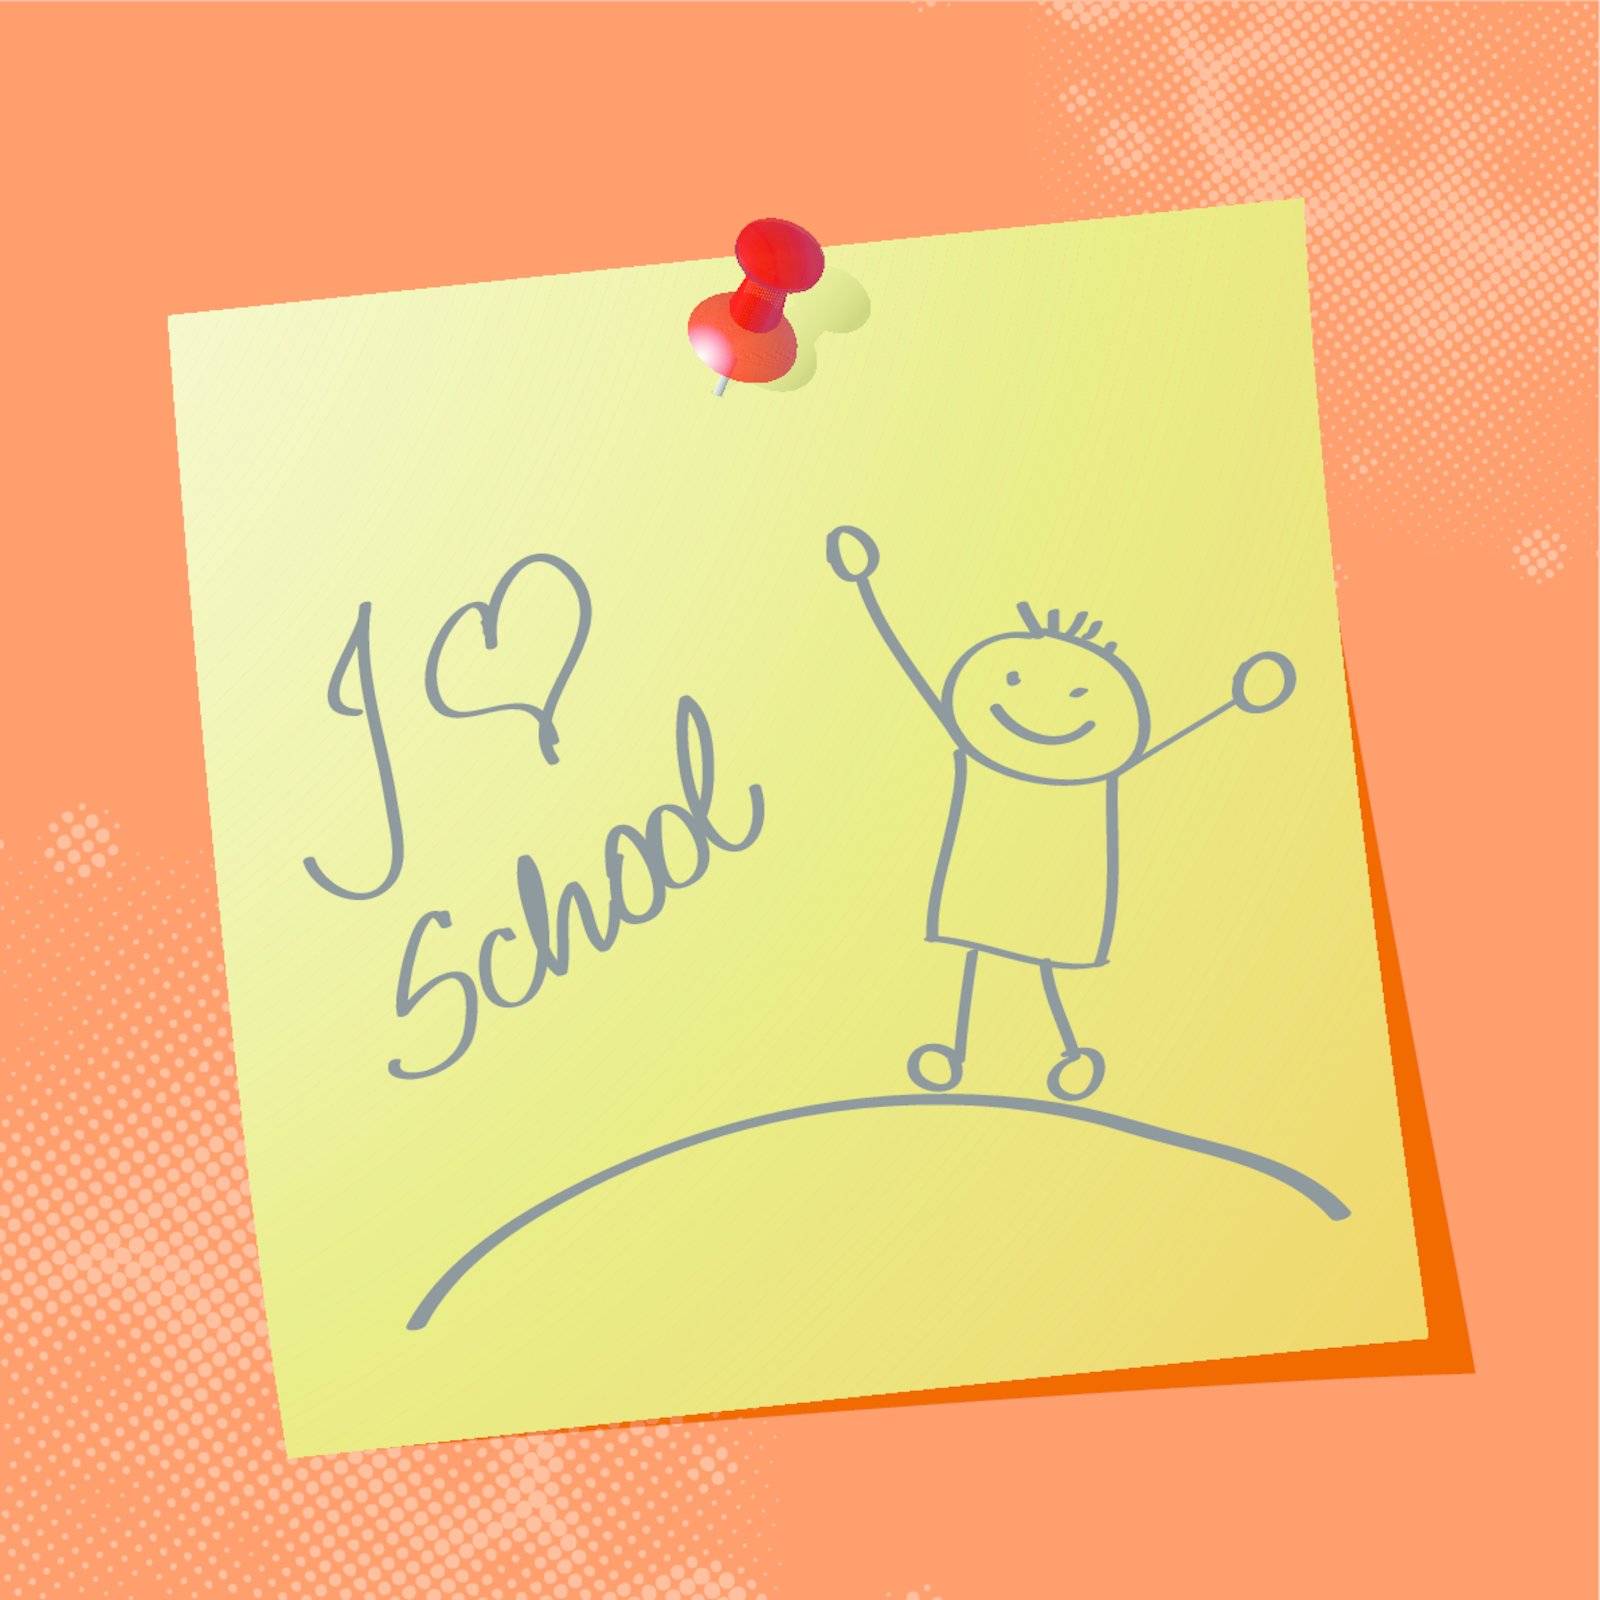 "I love school" handwritten message on sticky paper, eps10 vector illustration